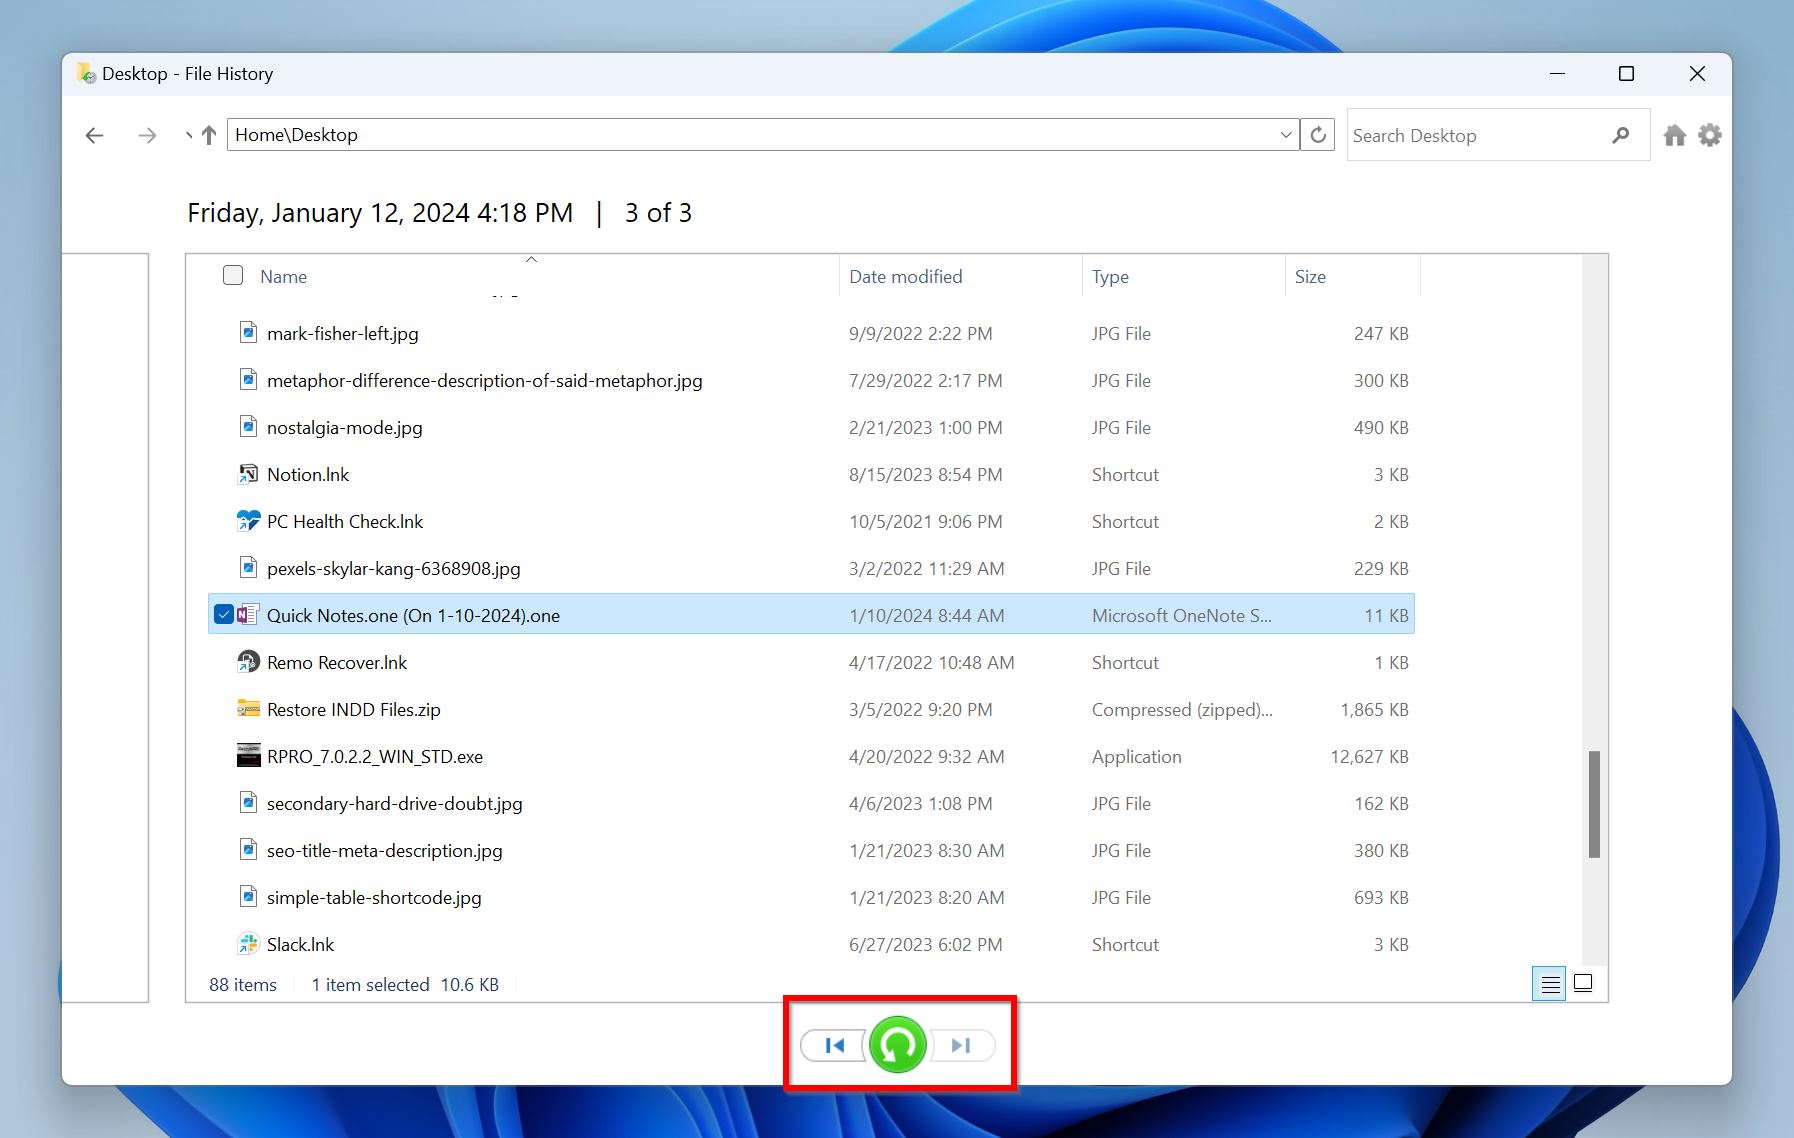  Windows File History list of files